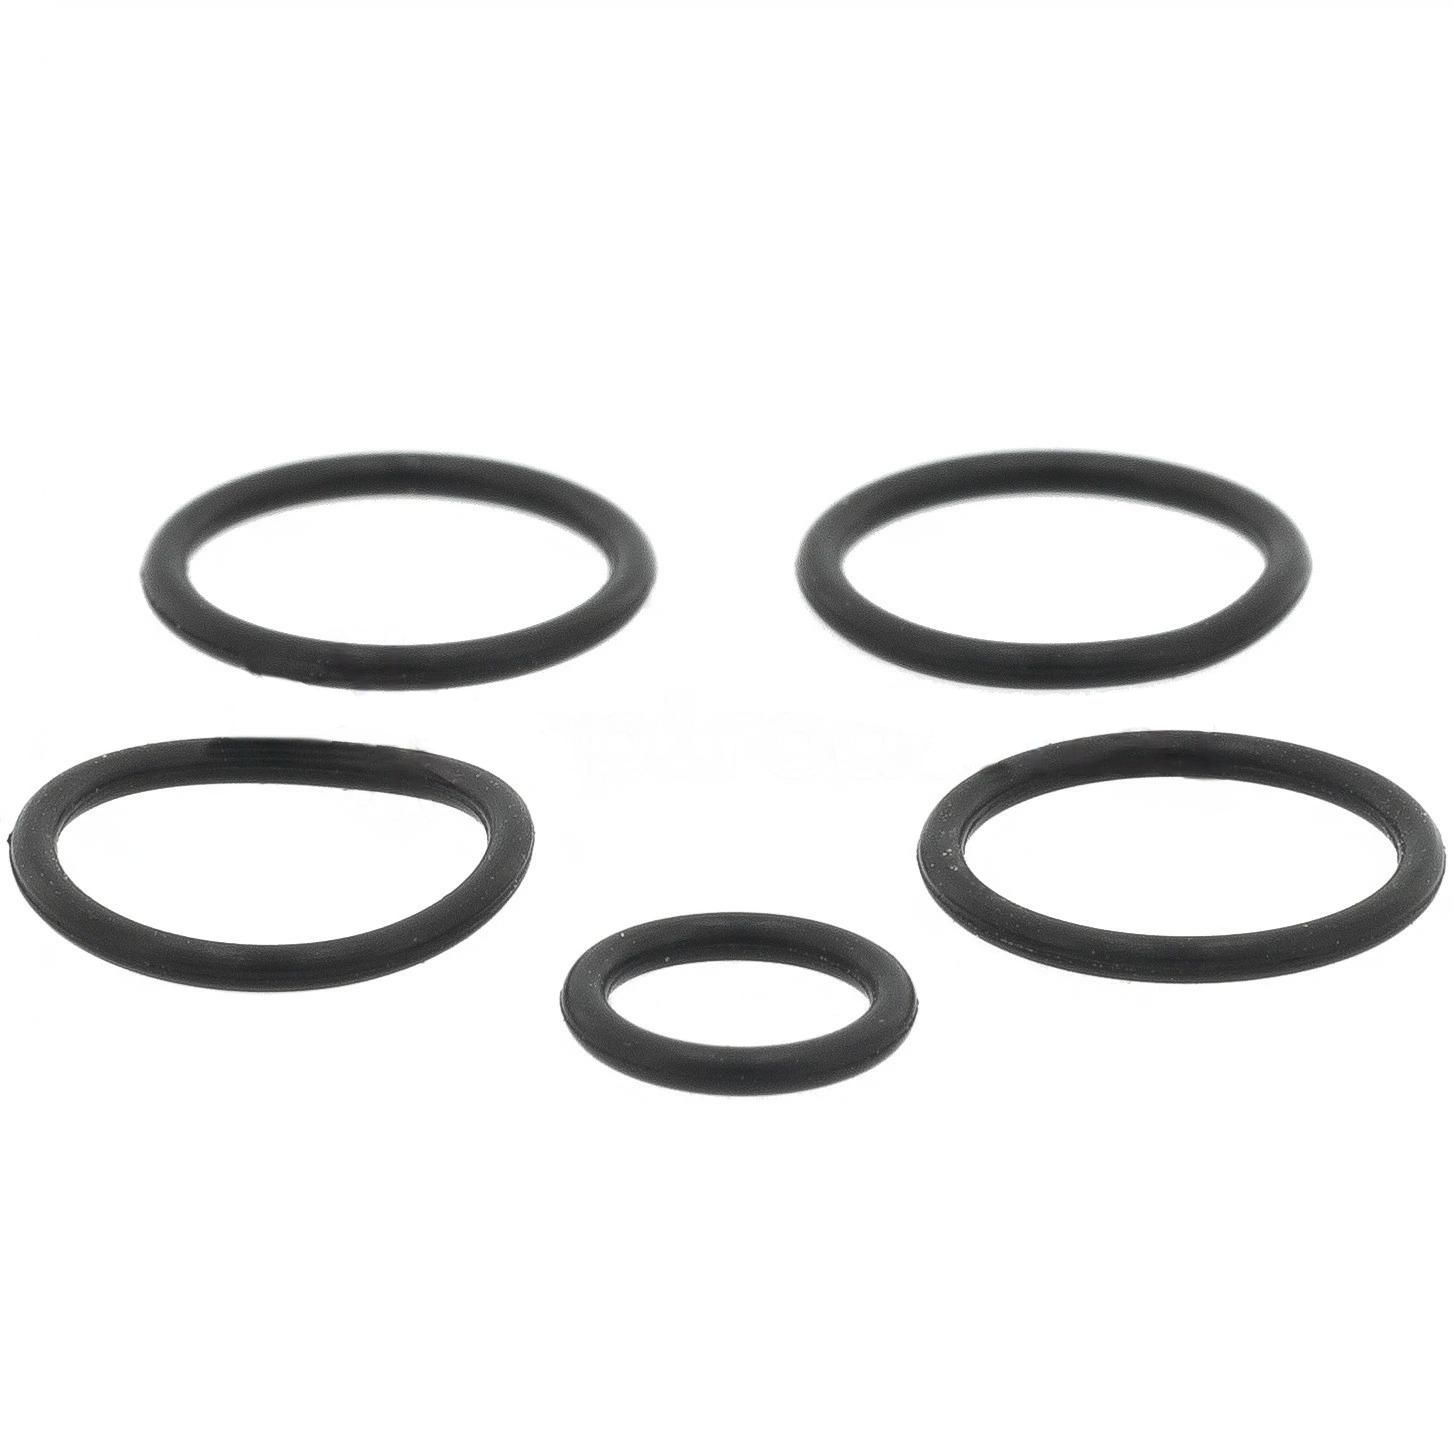 O-rings for NSK PTL-CL Quick Coupler